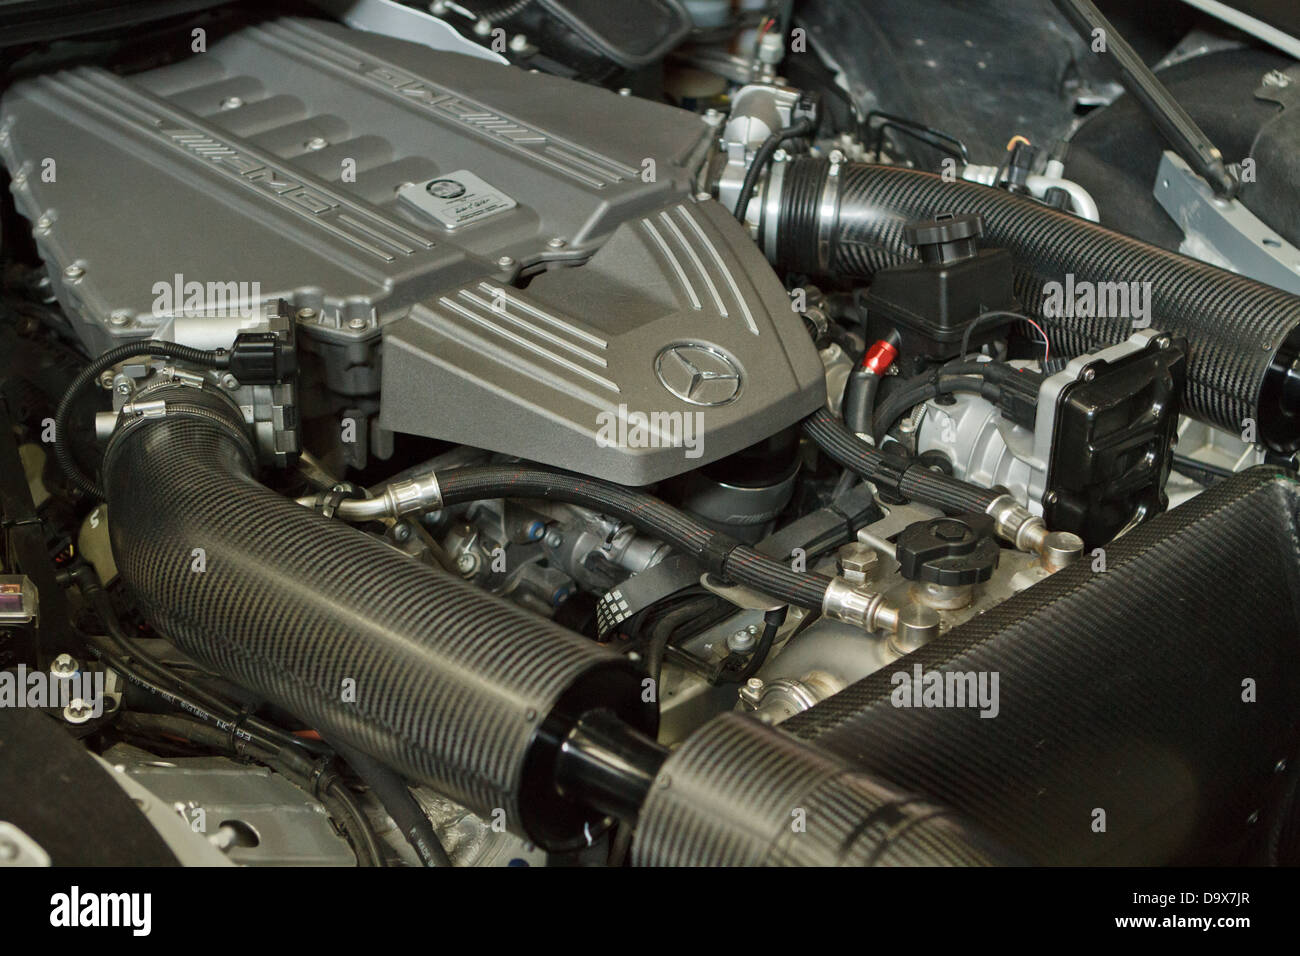 Mercedes SLS AMG GT3 engine Stock Photo Alamy